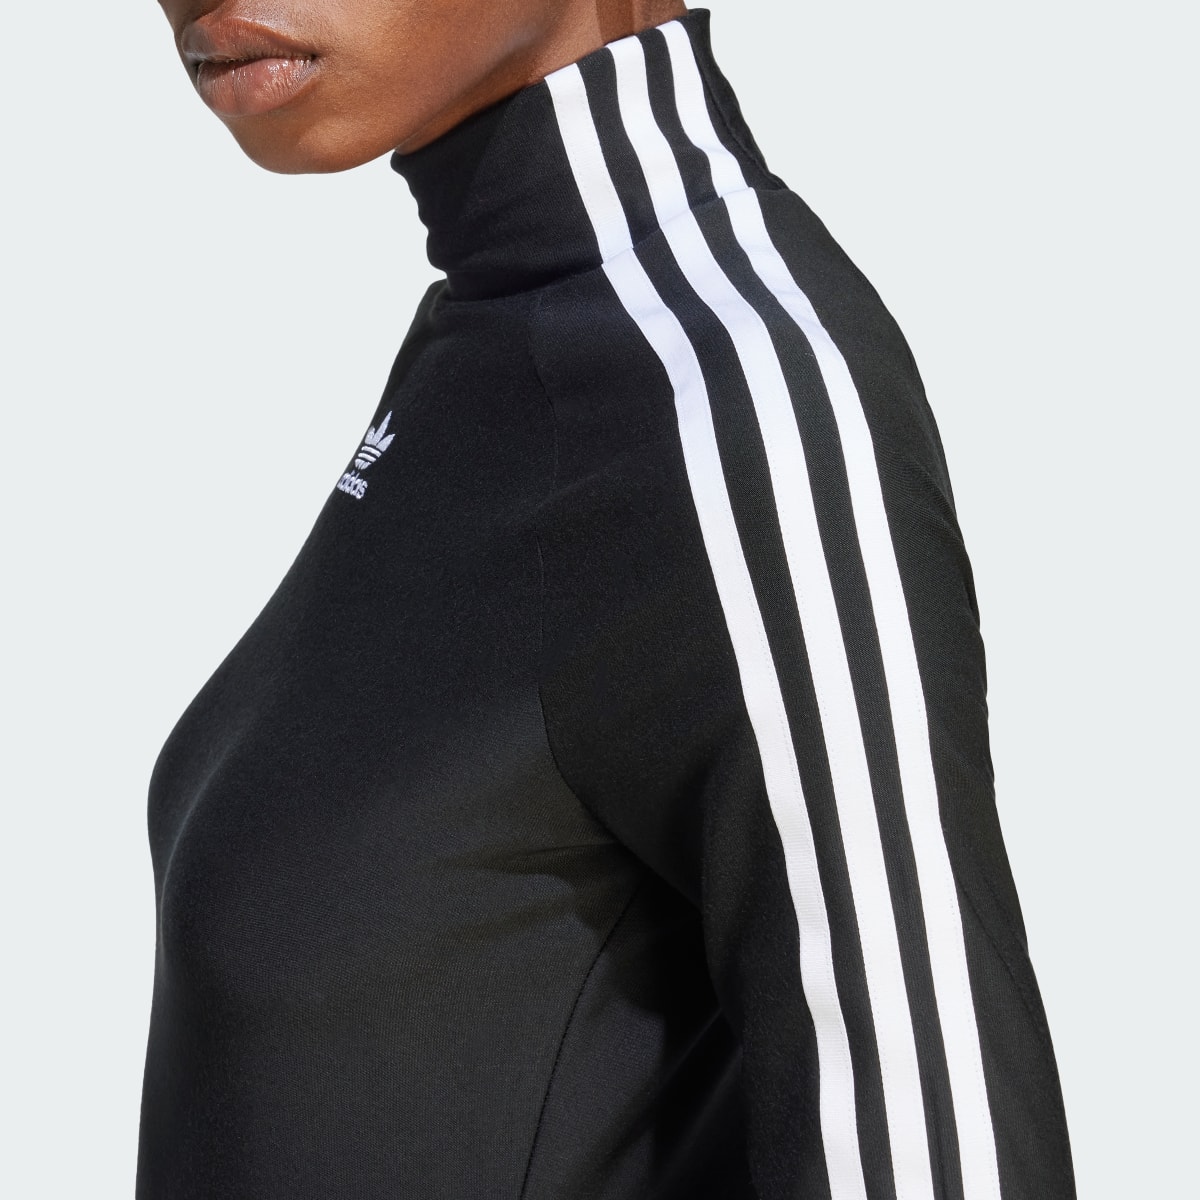 Adidas Koszulka Adilenium Tight Long Sleeve. 7